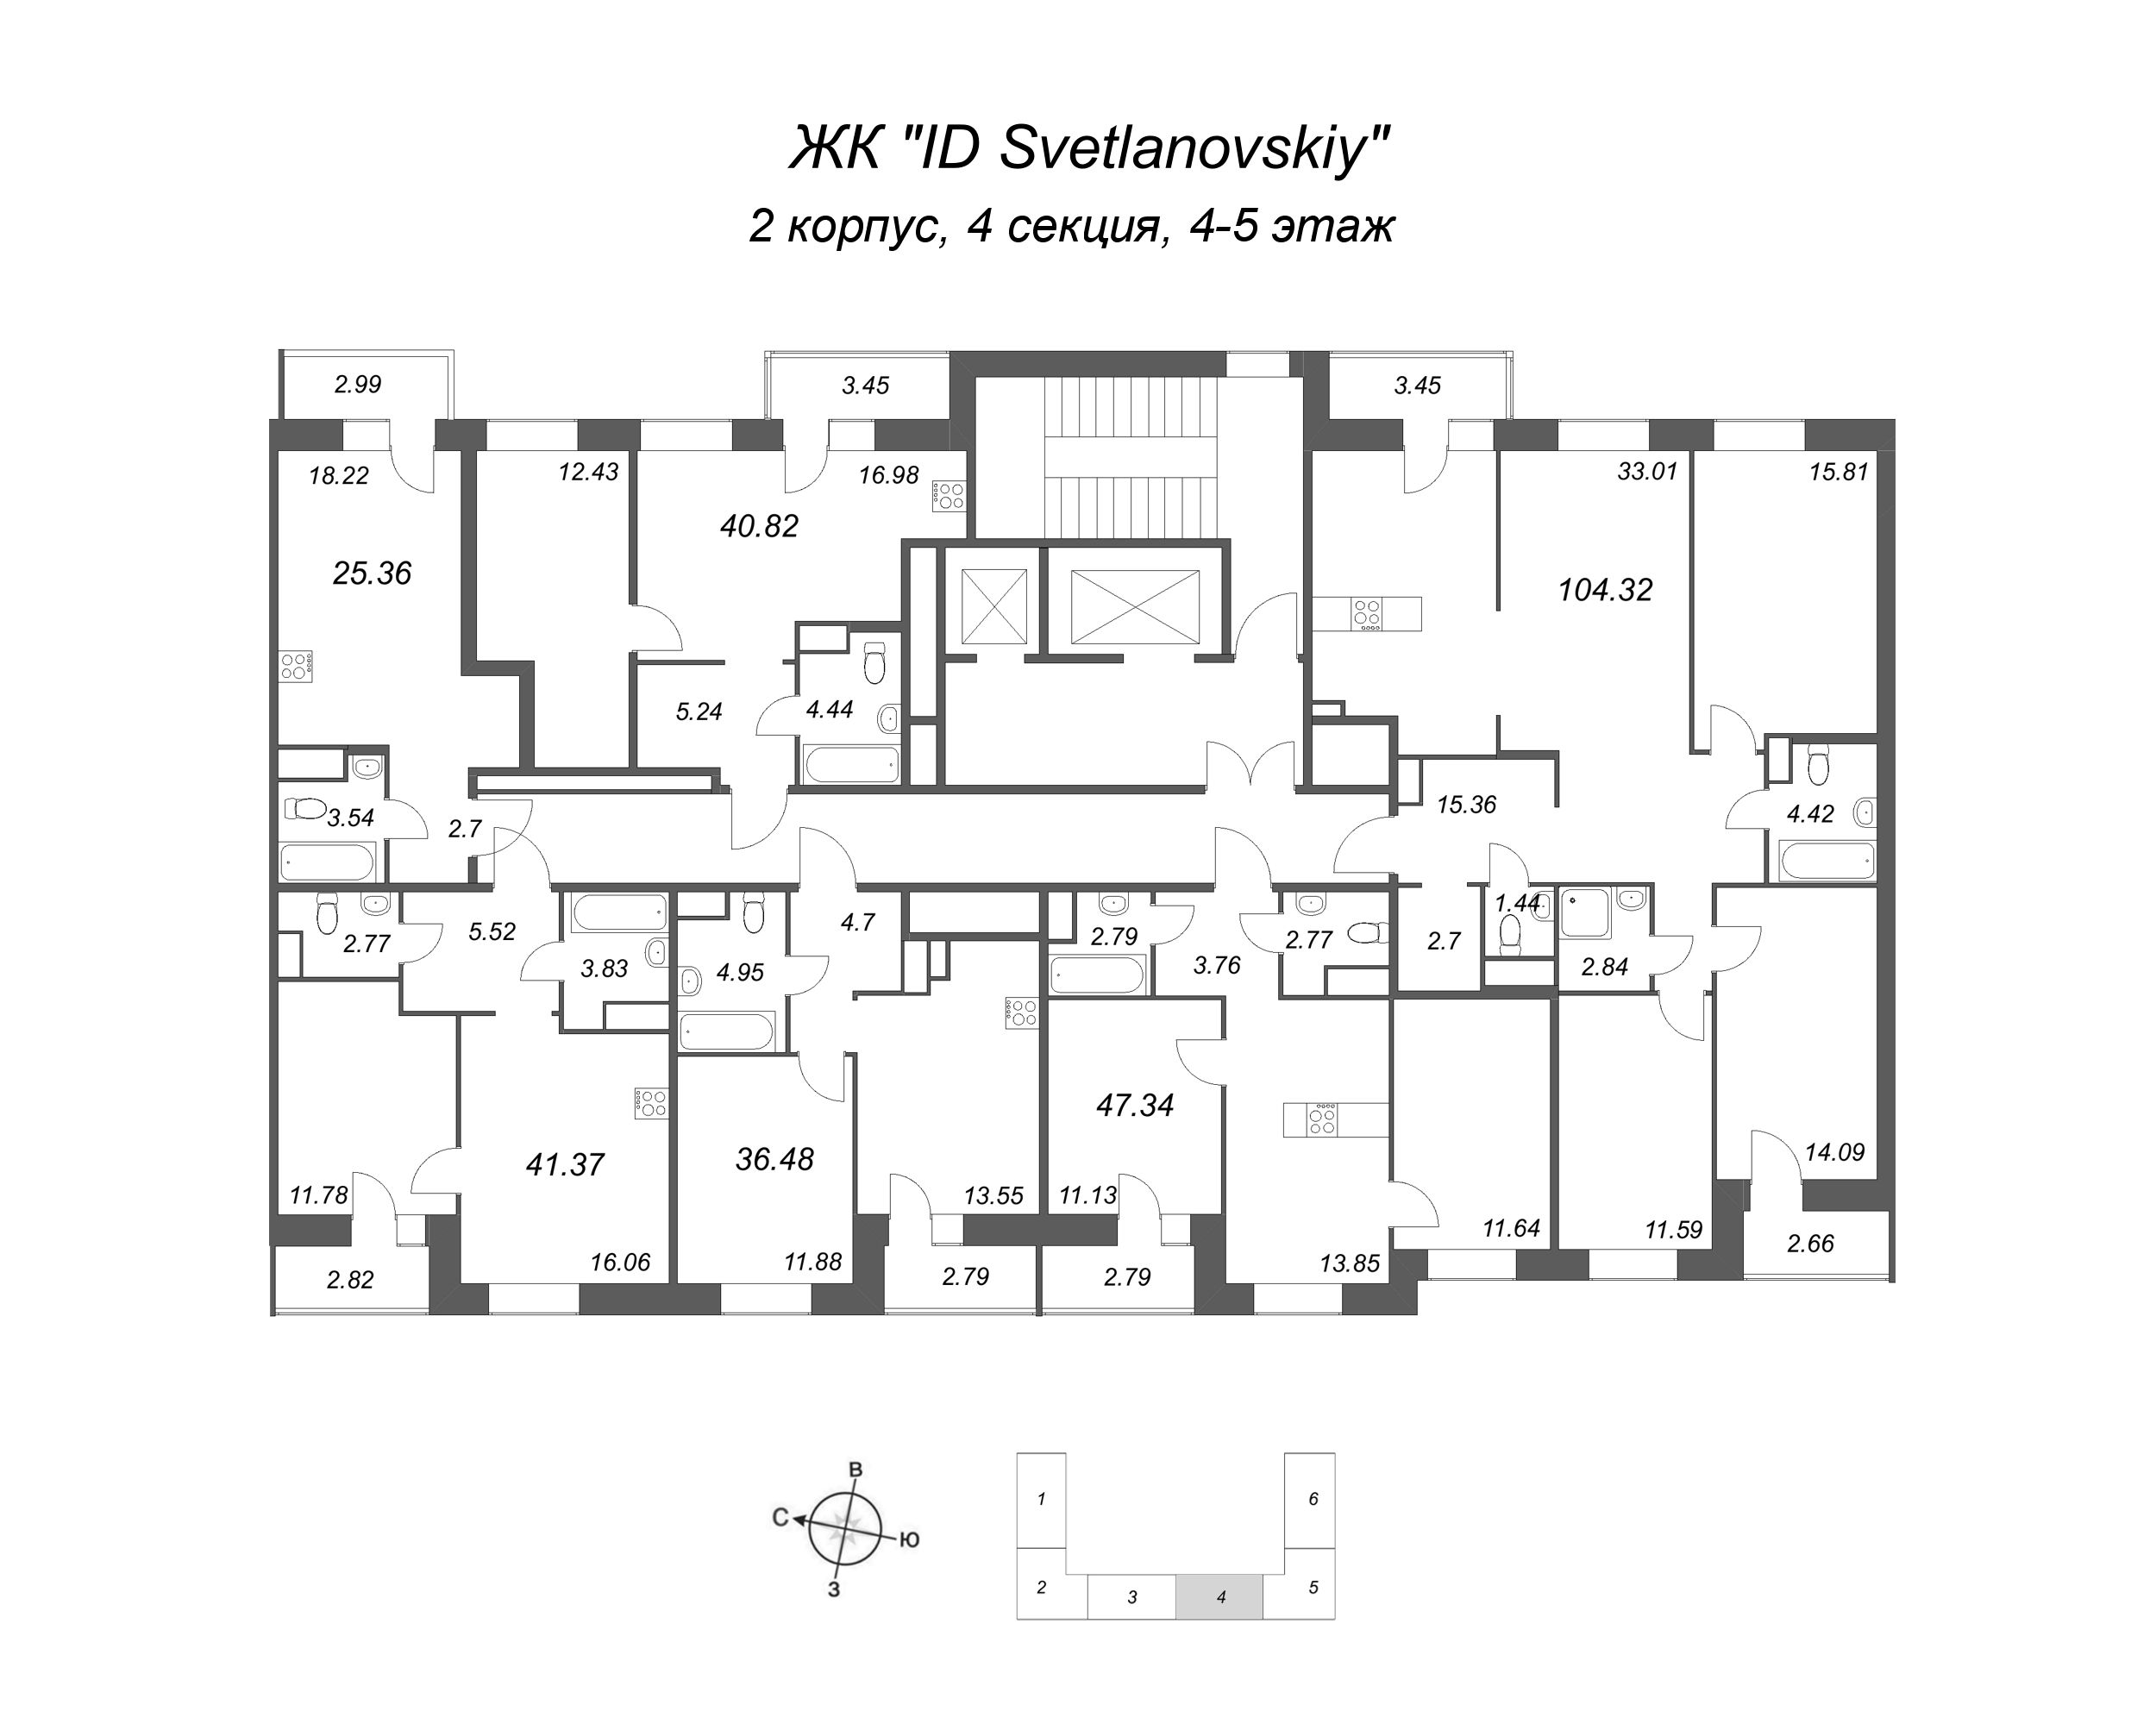 4-комнатная (Евро) квартира, 104.32 м² - планировка этажа